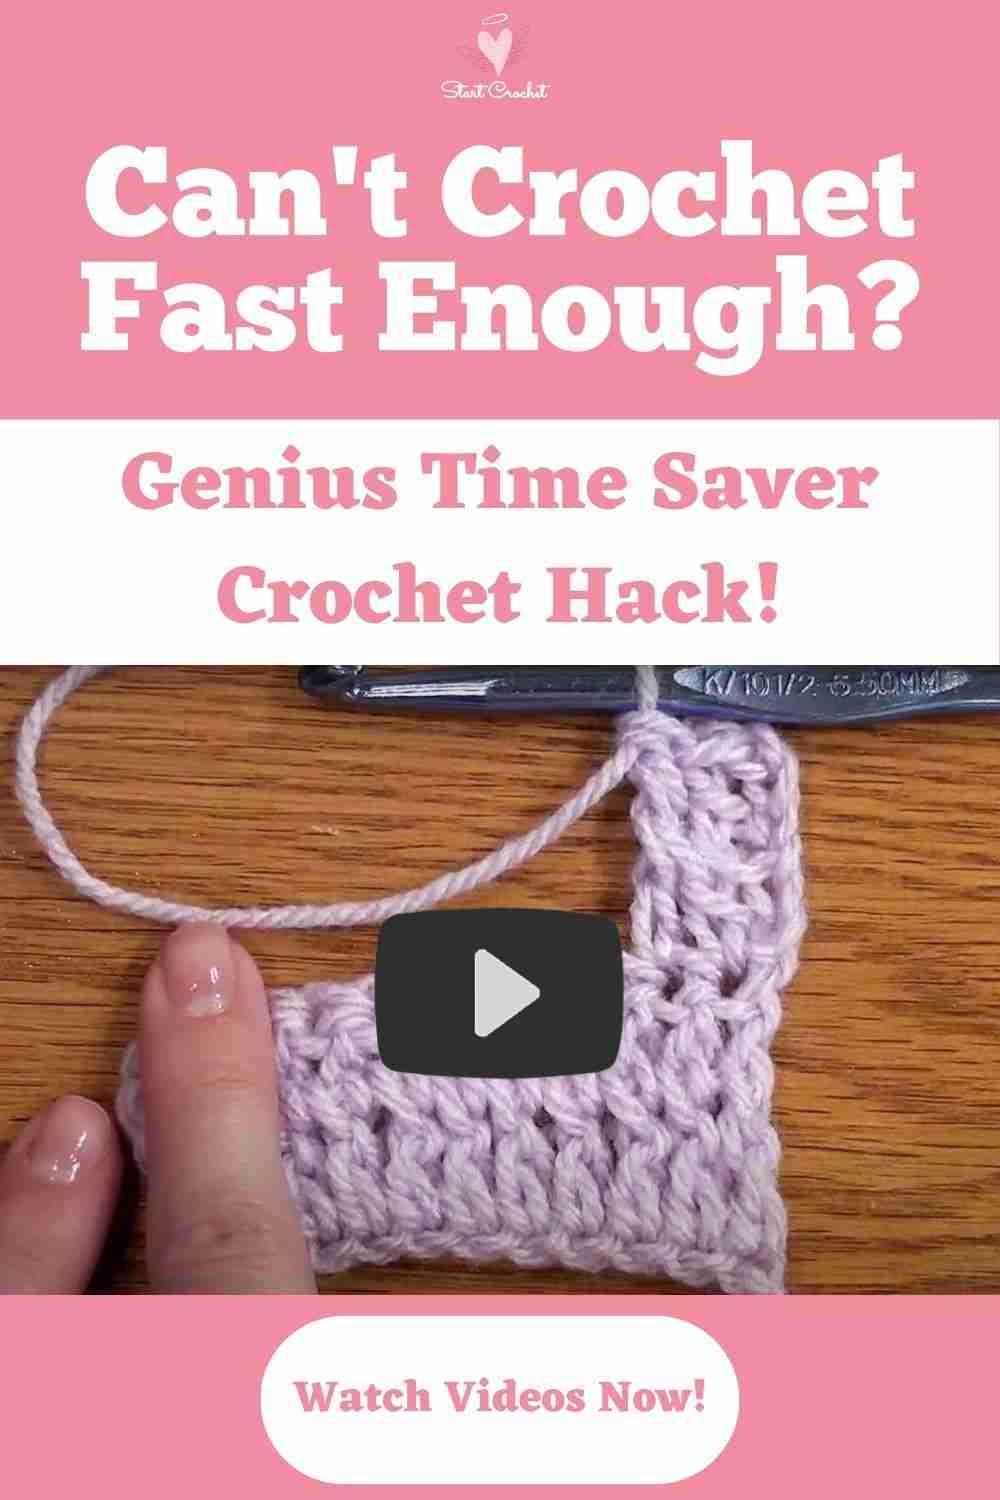 Can't Crochet Fast Enough? Start Crochet